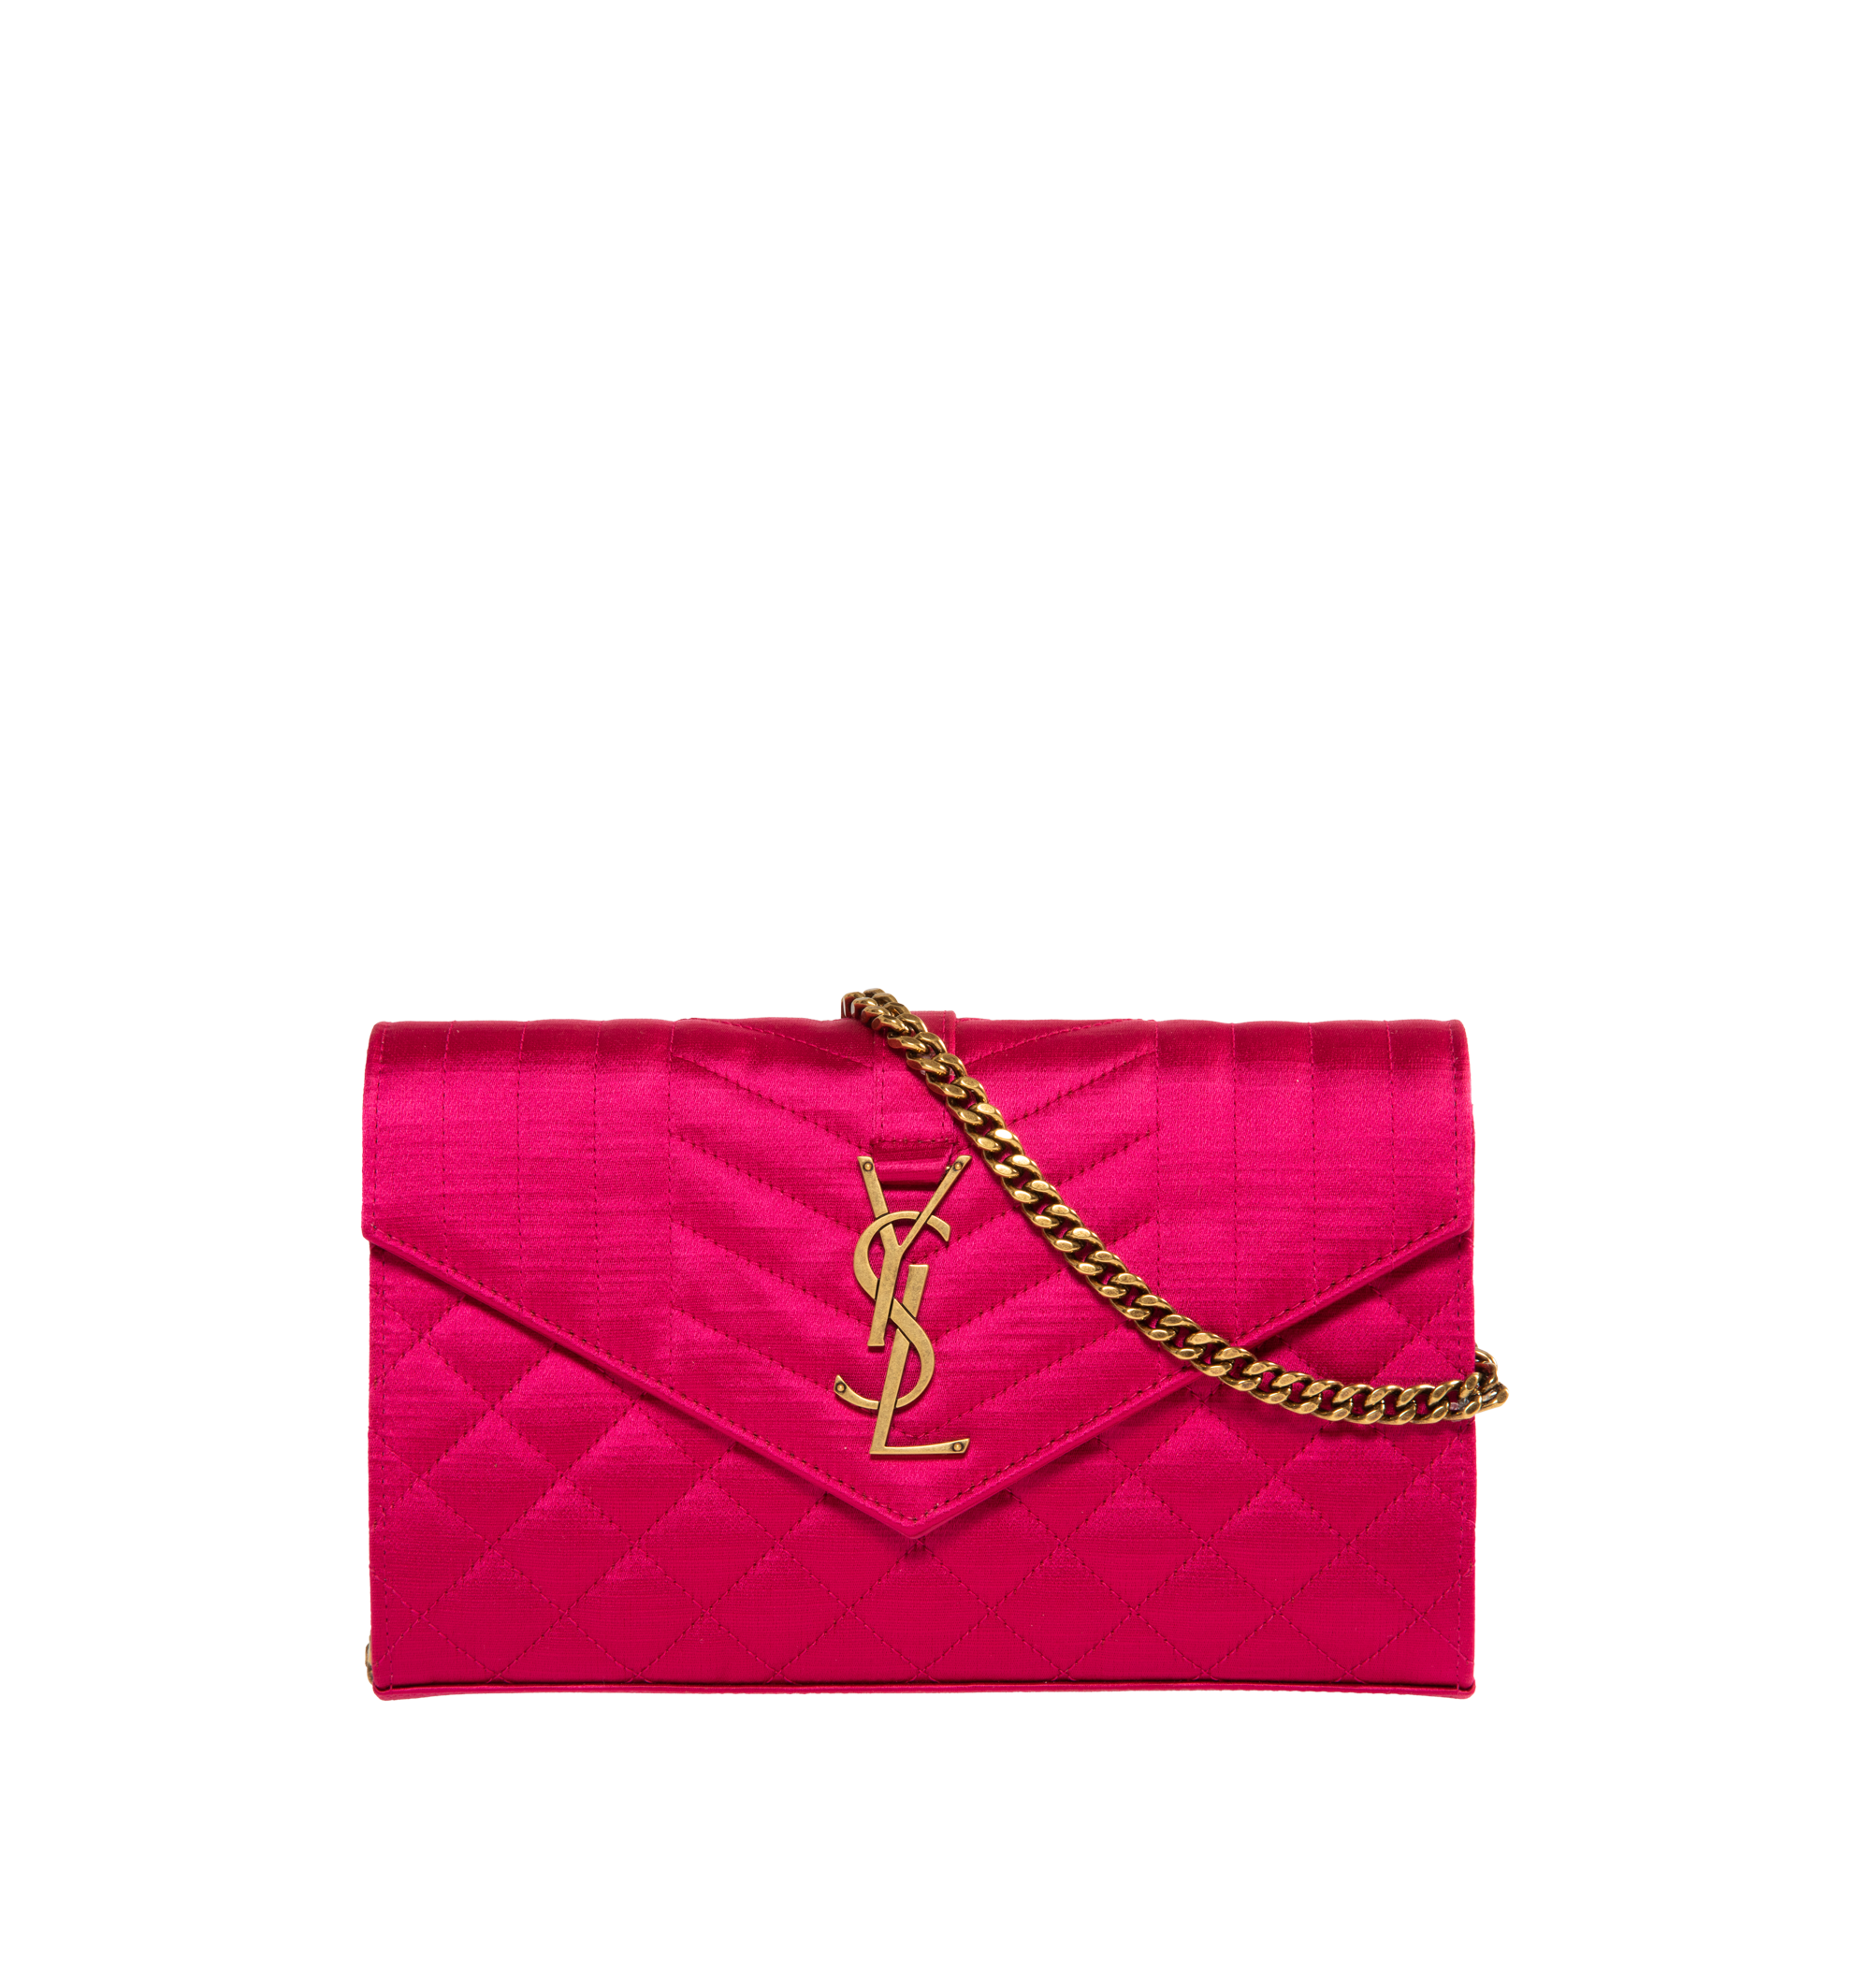 SYL Pink Clutch Saint Laurent envelope corssbody PINK - Price in India